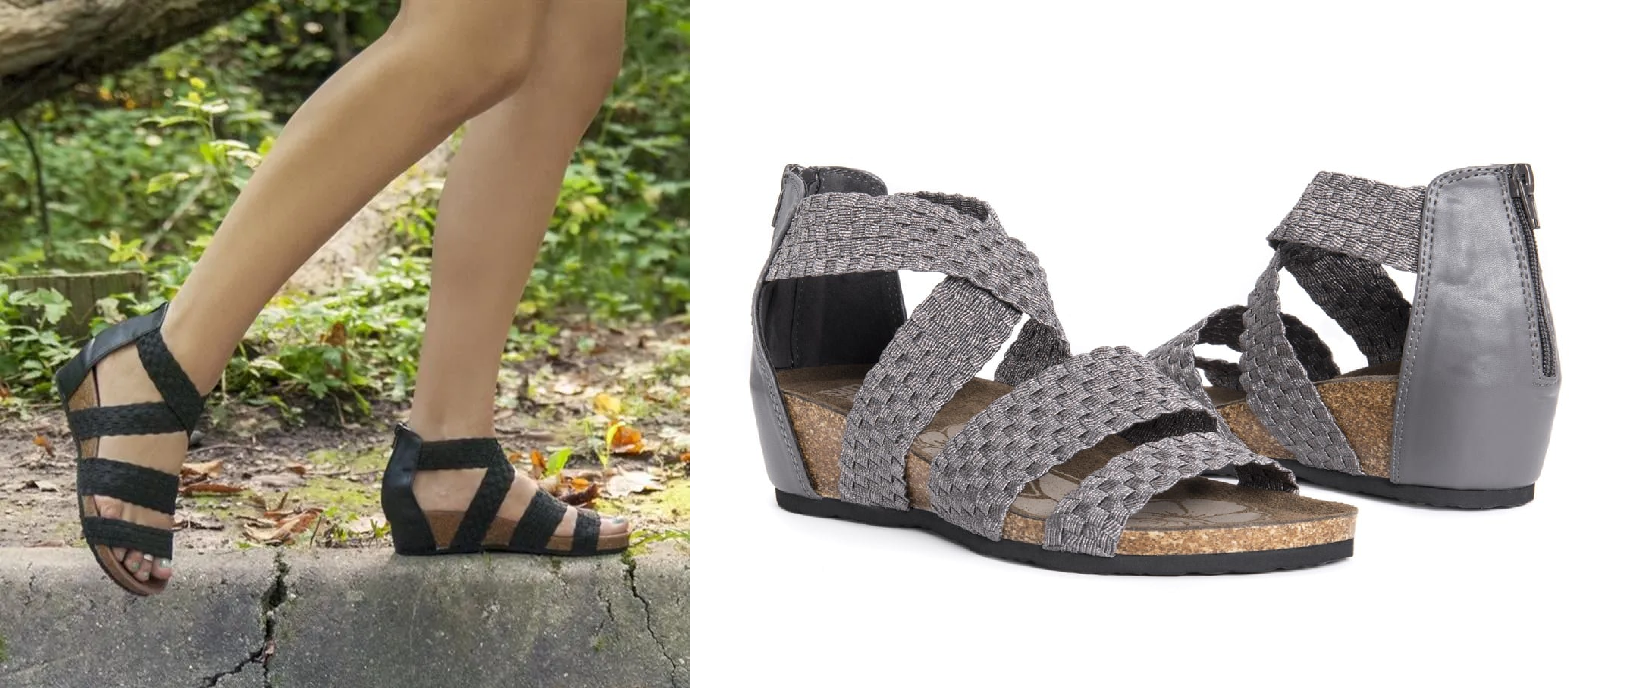 Jane.com – Muk Luks Elle Wedge Sandals just .99 + Free Shipping!